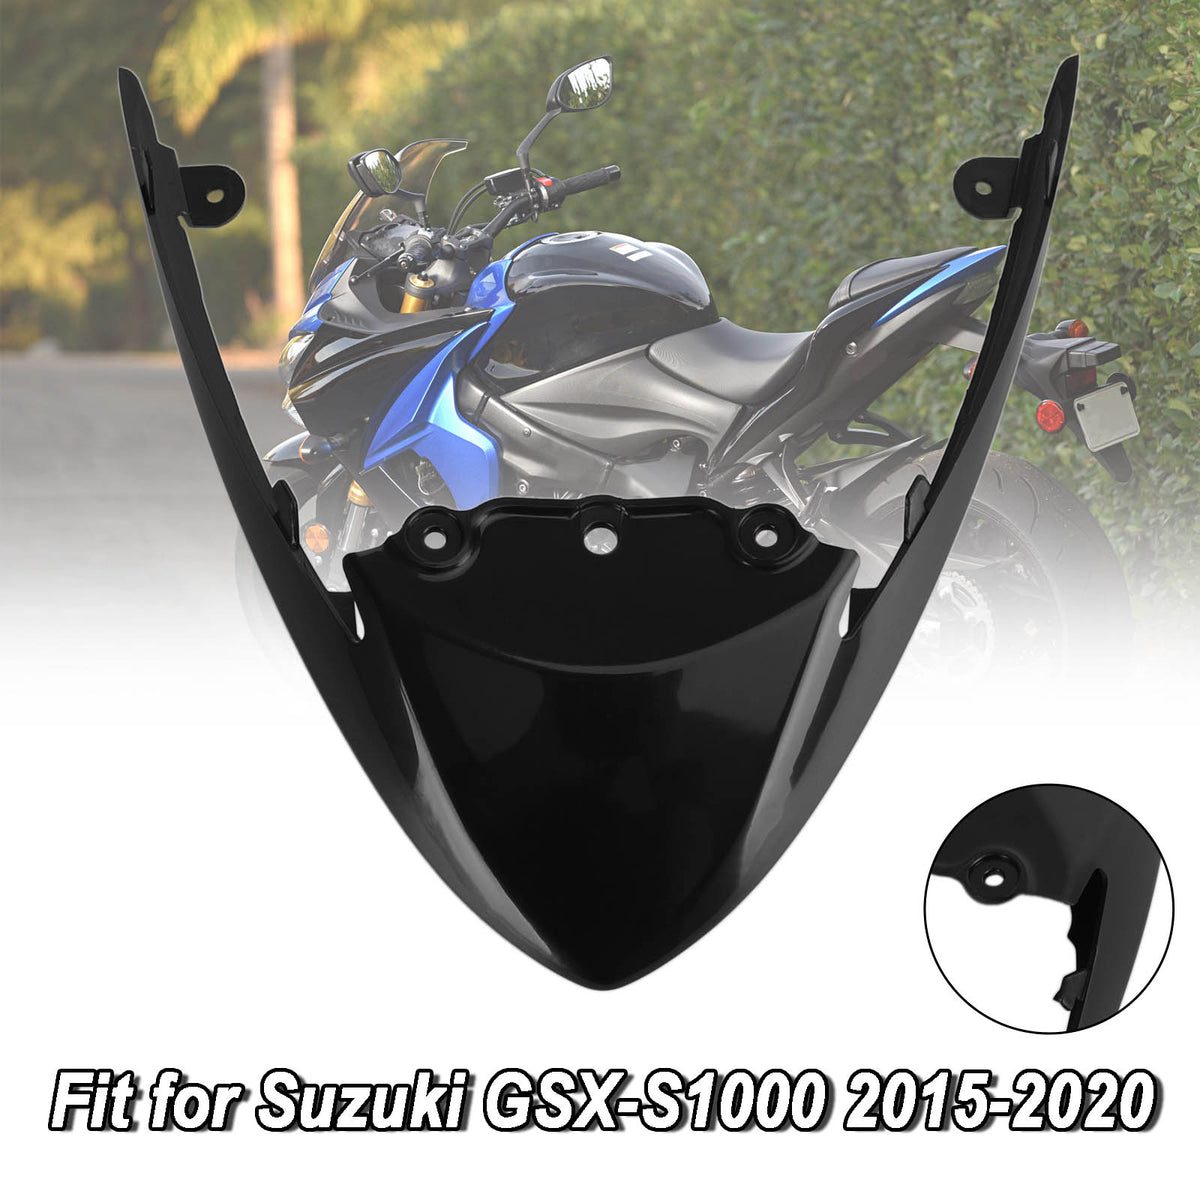 Unpainted Rear Tail Light Seat Cover Fairing For Suzuki GSX-S 1000 2015-2020 Generic